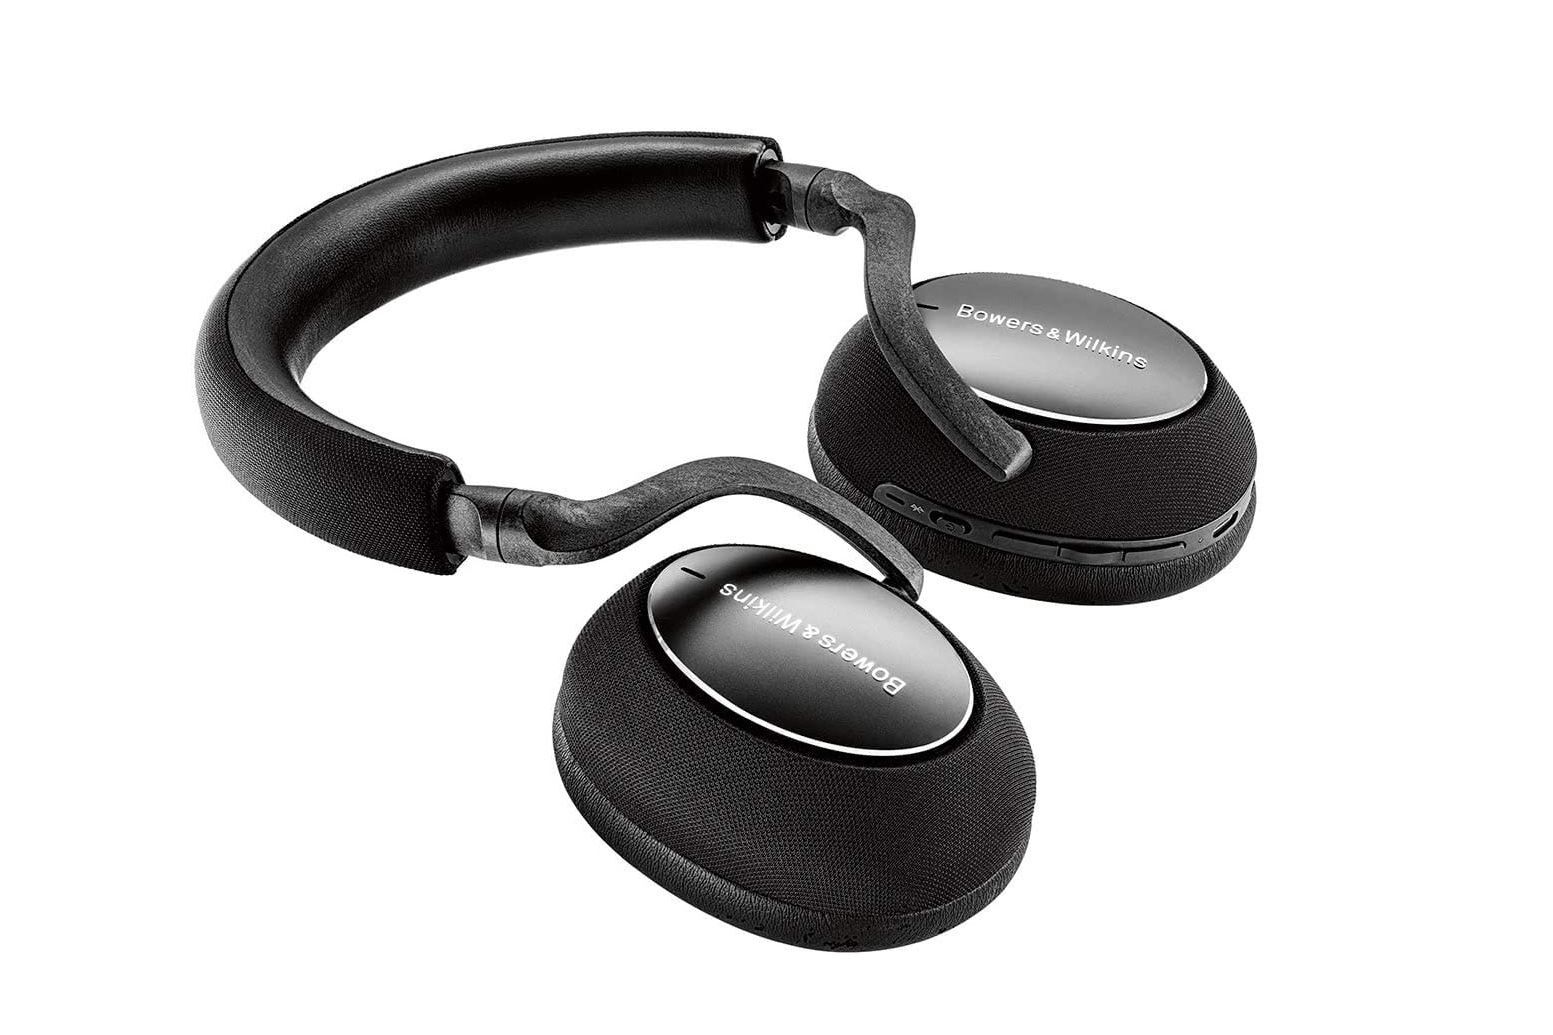 Hemat $100 untuk sepasang headphone audiophile sekarang juga!